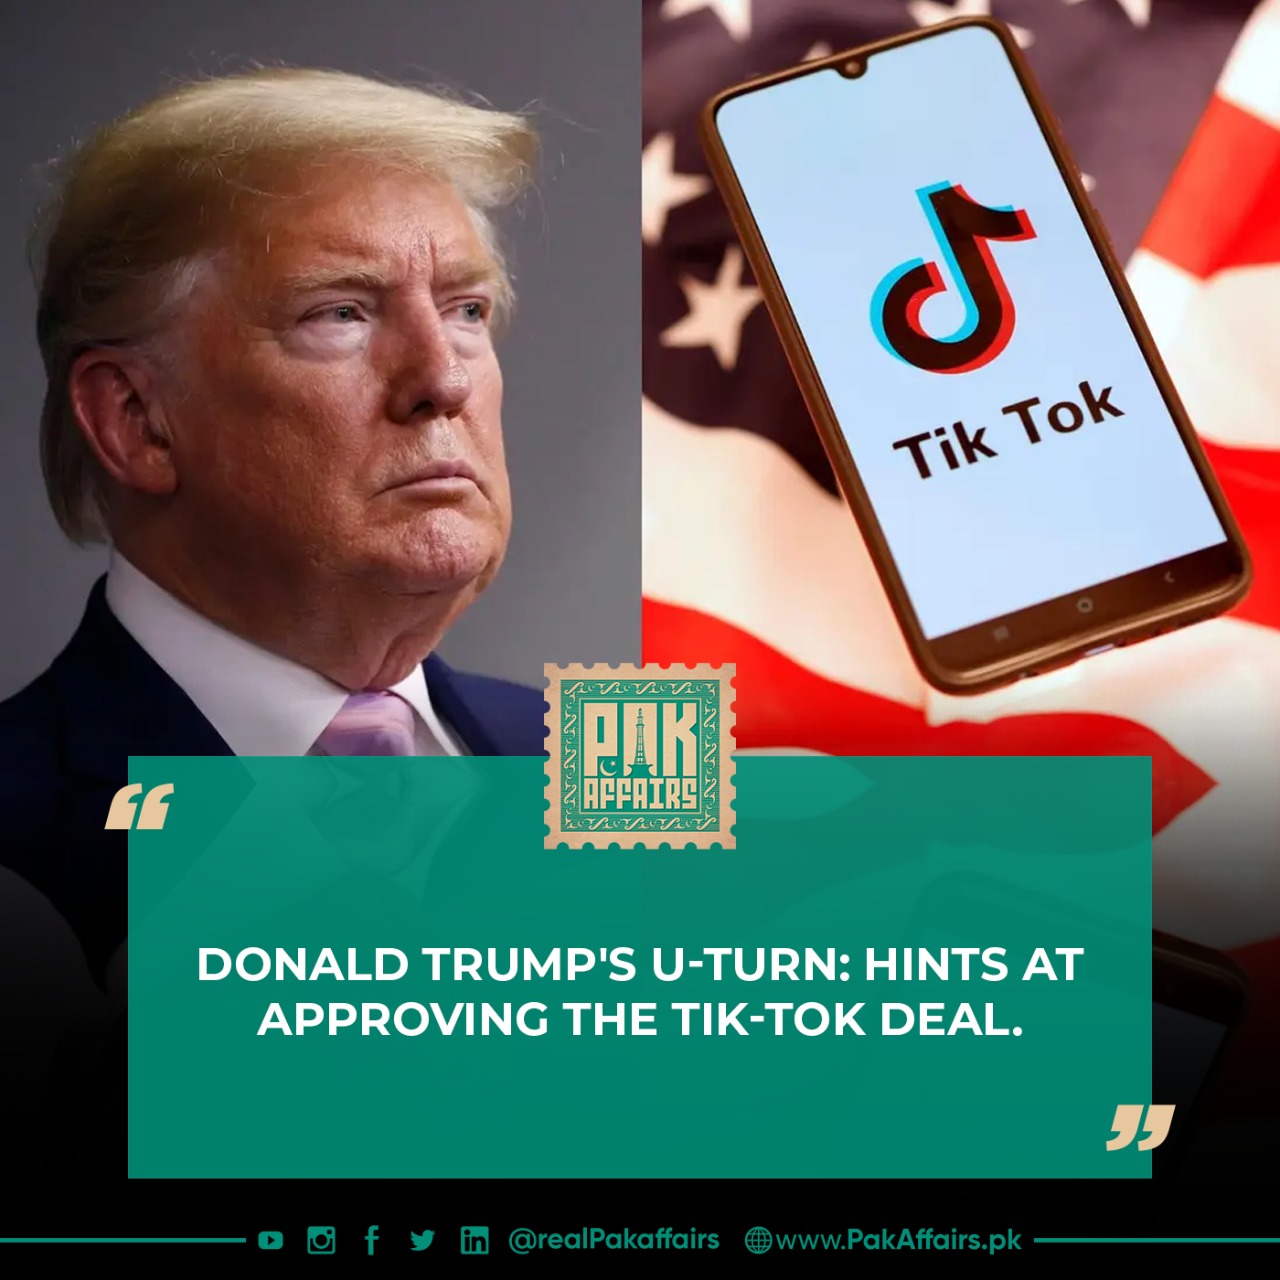 Donald Trump's U-turn: Hints at approving the tik-tok deal.